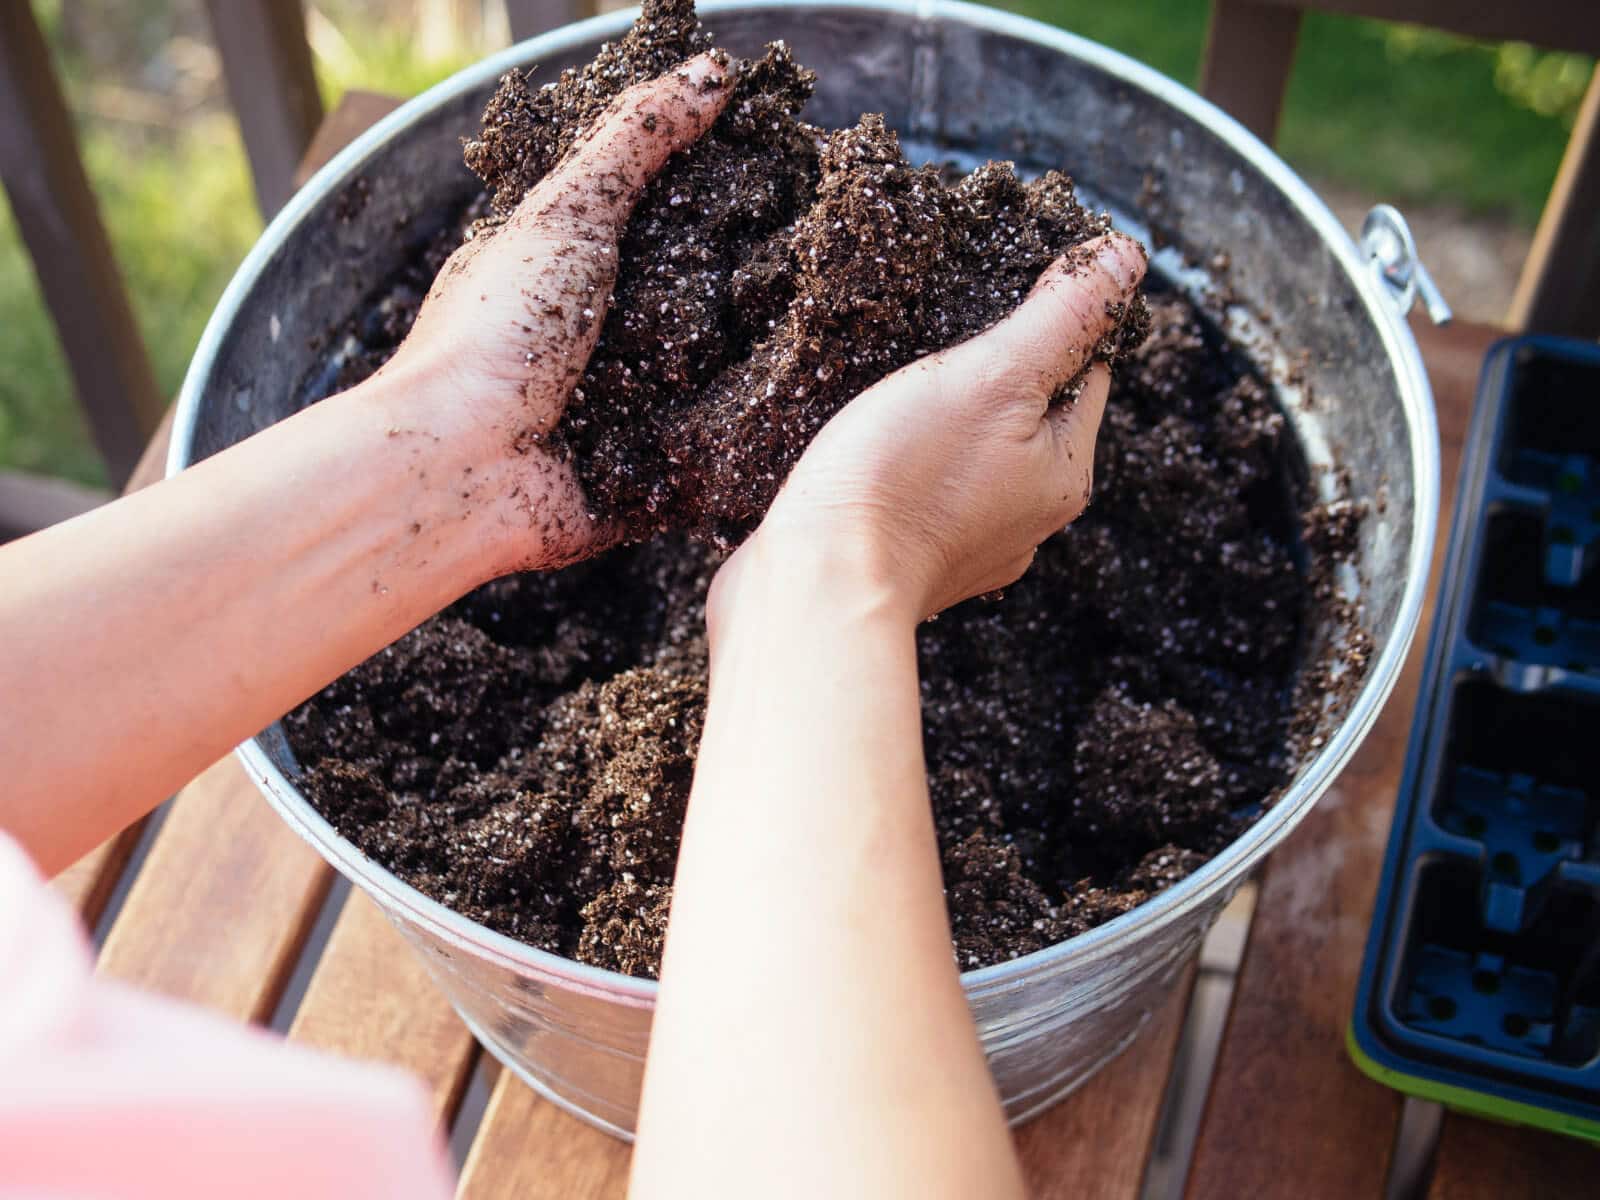 How to Prepare Coco Coir: Garden Use vs Indoor Plants